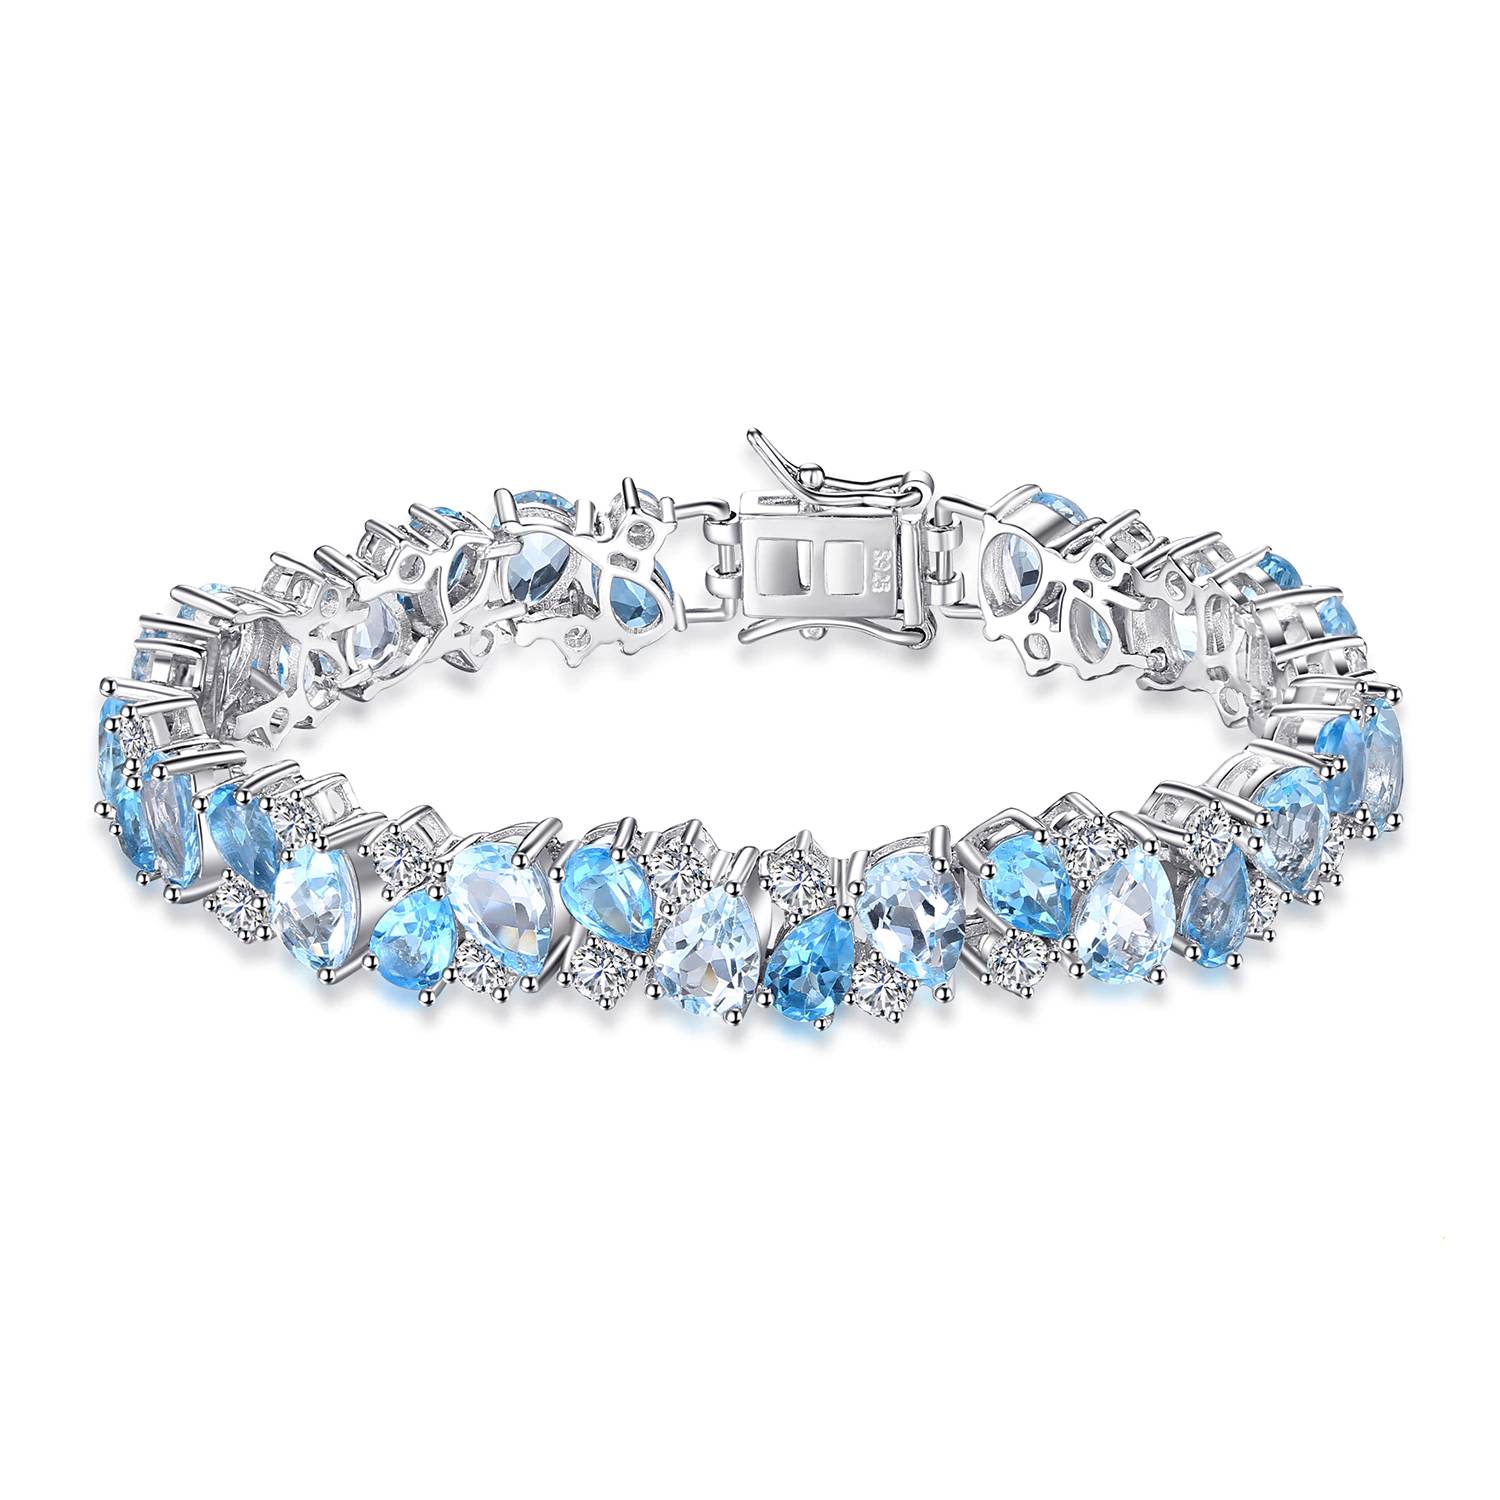 23ct Silver London Blue Topaz Women's Tennis Bracelet | Jewelry Addicts